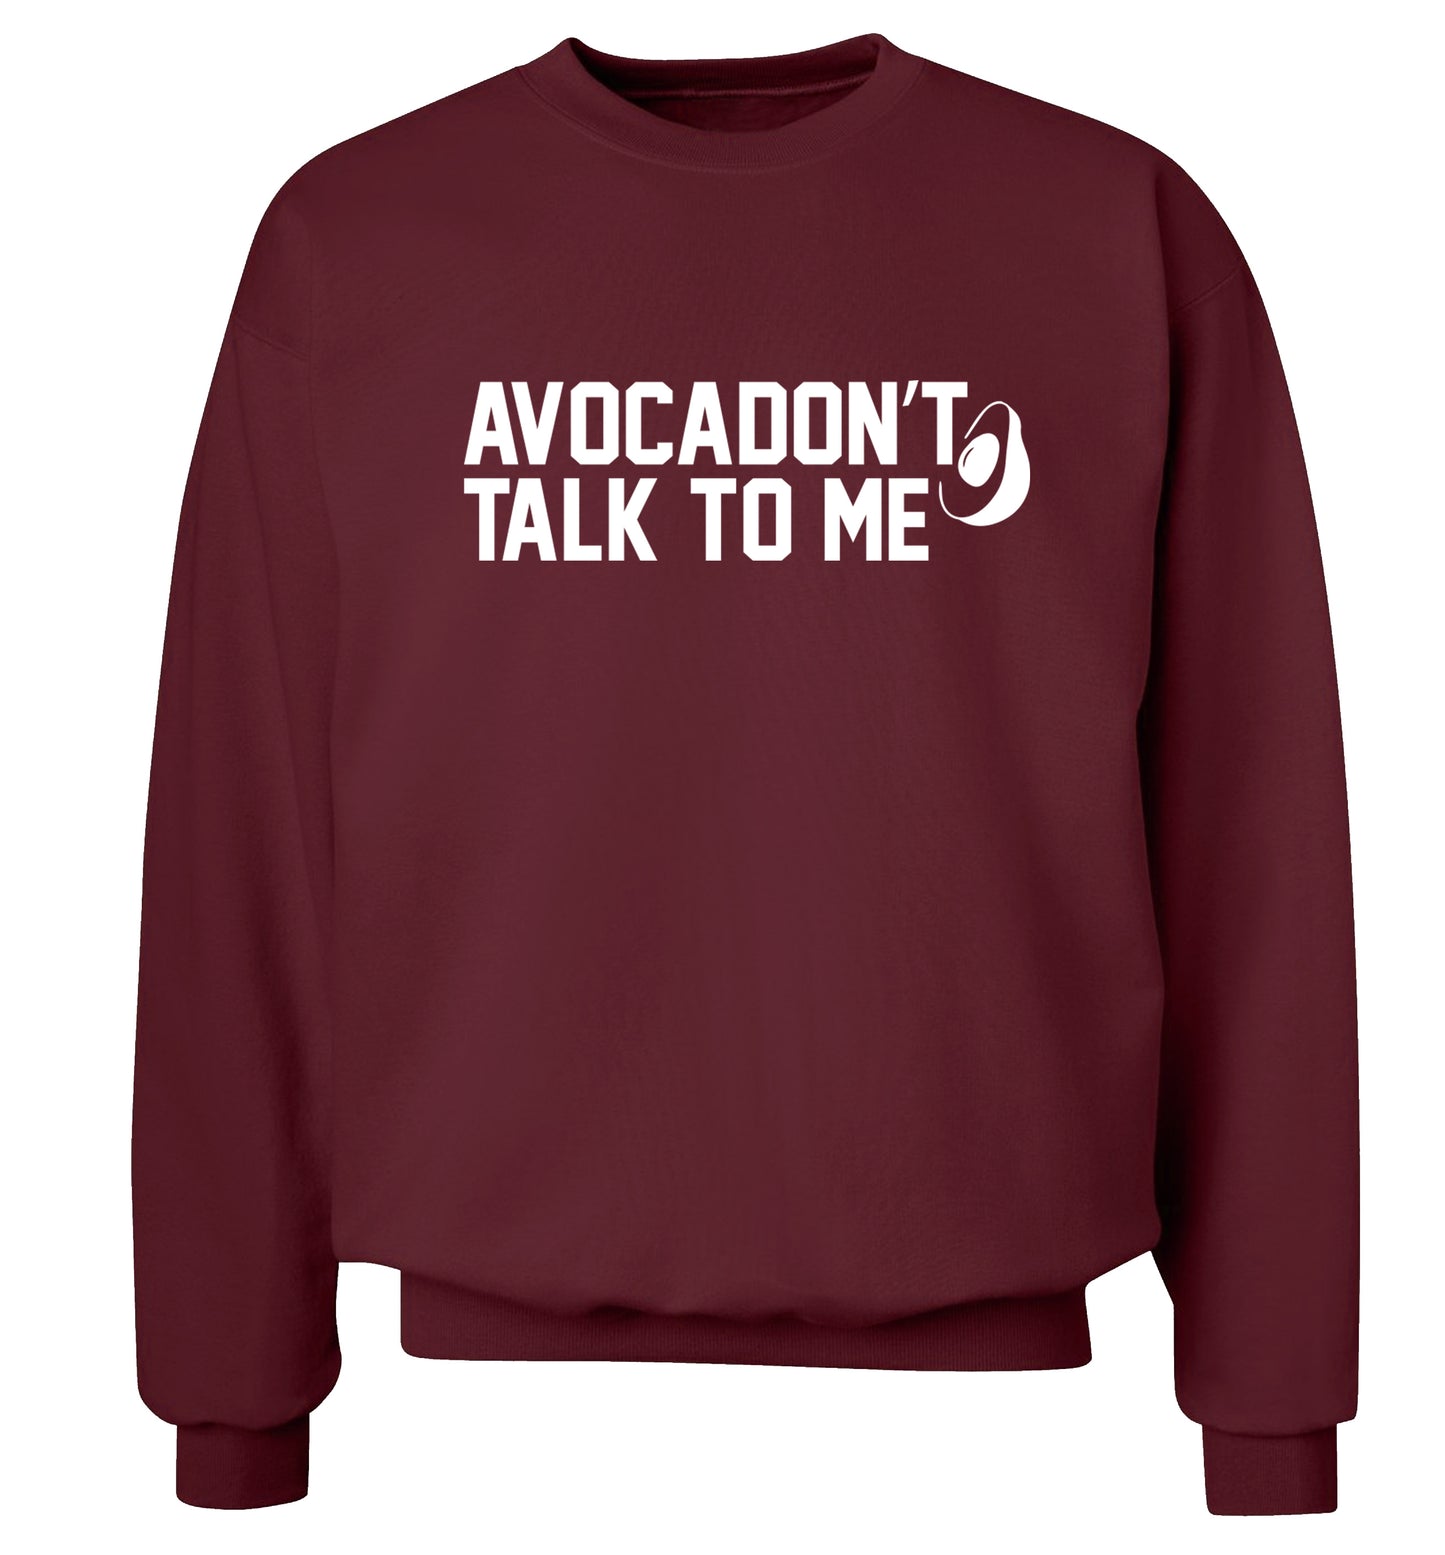 Avocadon't talk to me Adult's unisex maroon Sweater 2XL